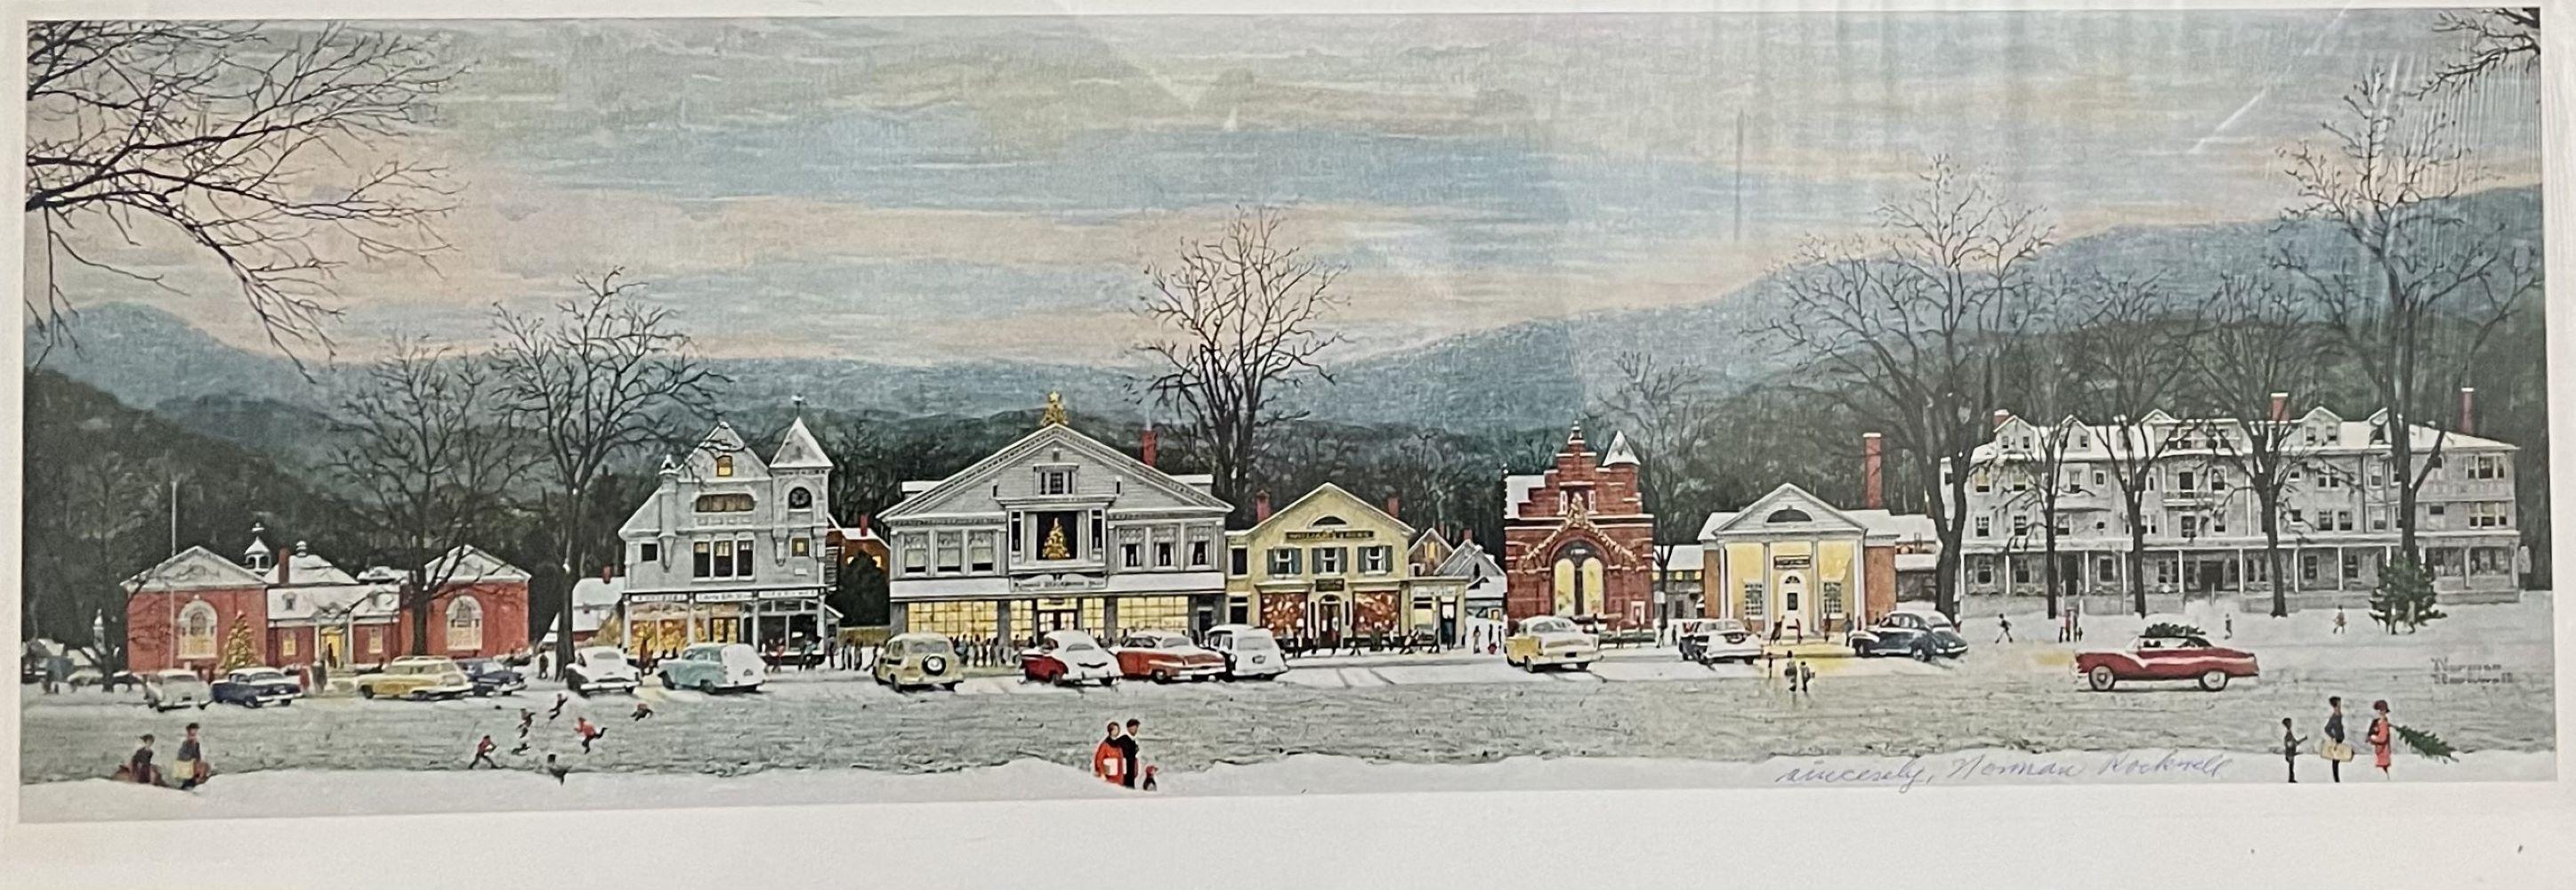 Norman Rockwell Landscape Print - Stockbridge Main Street at Christmas (Home for Christmas)